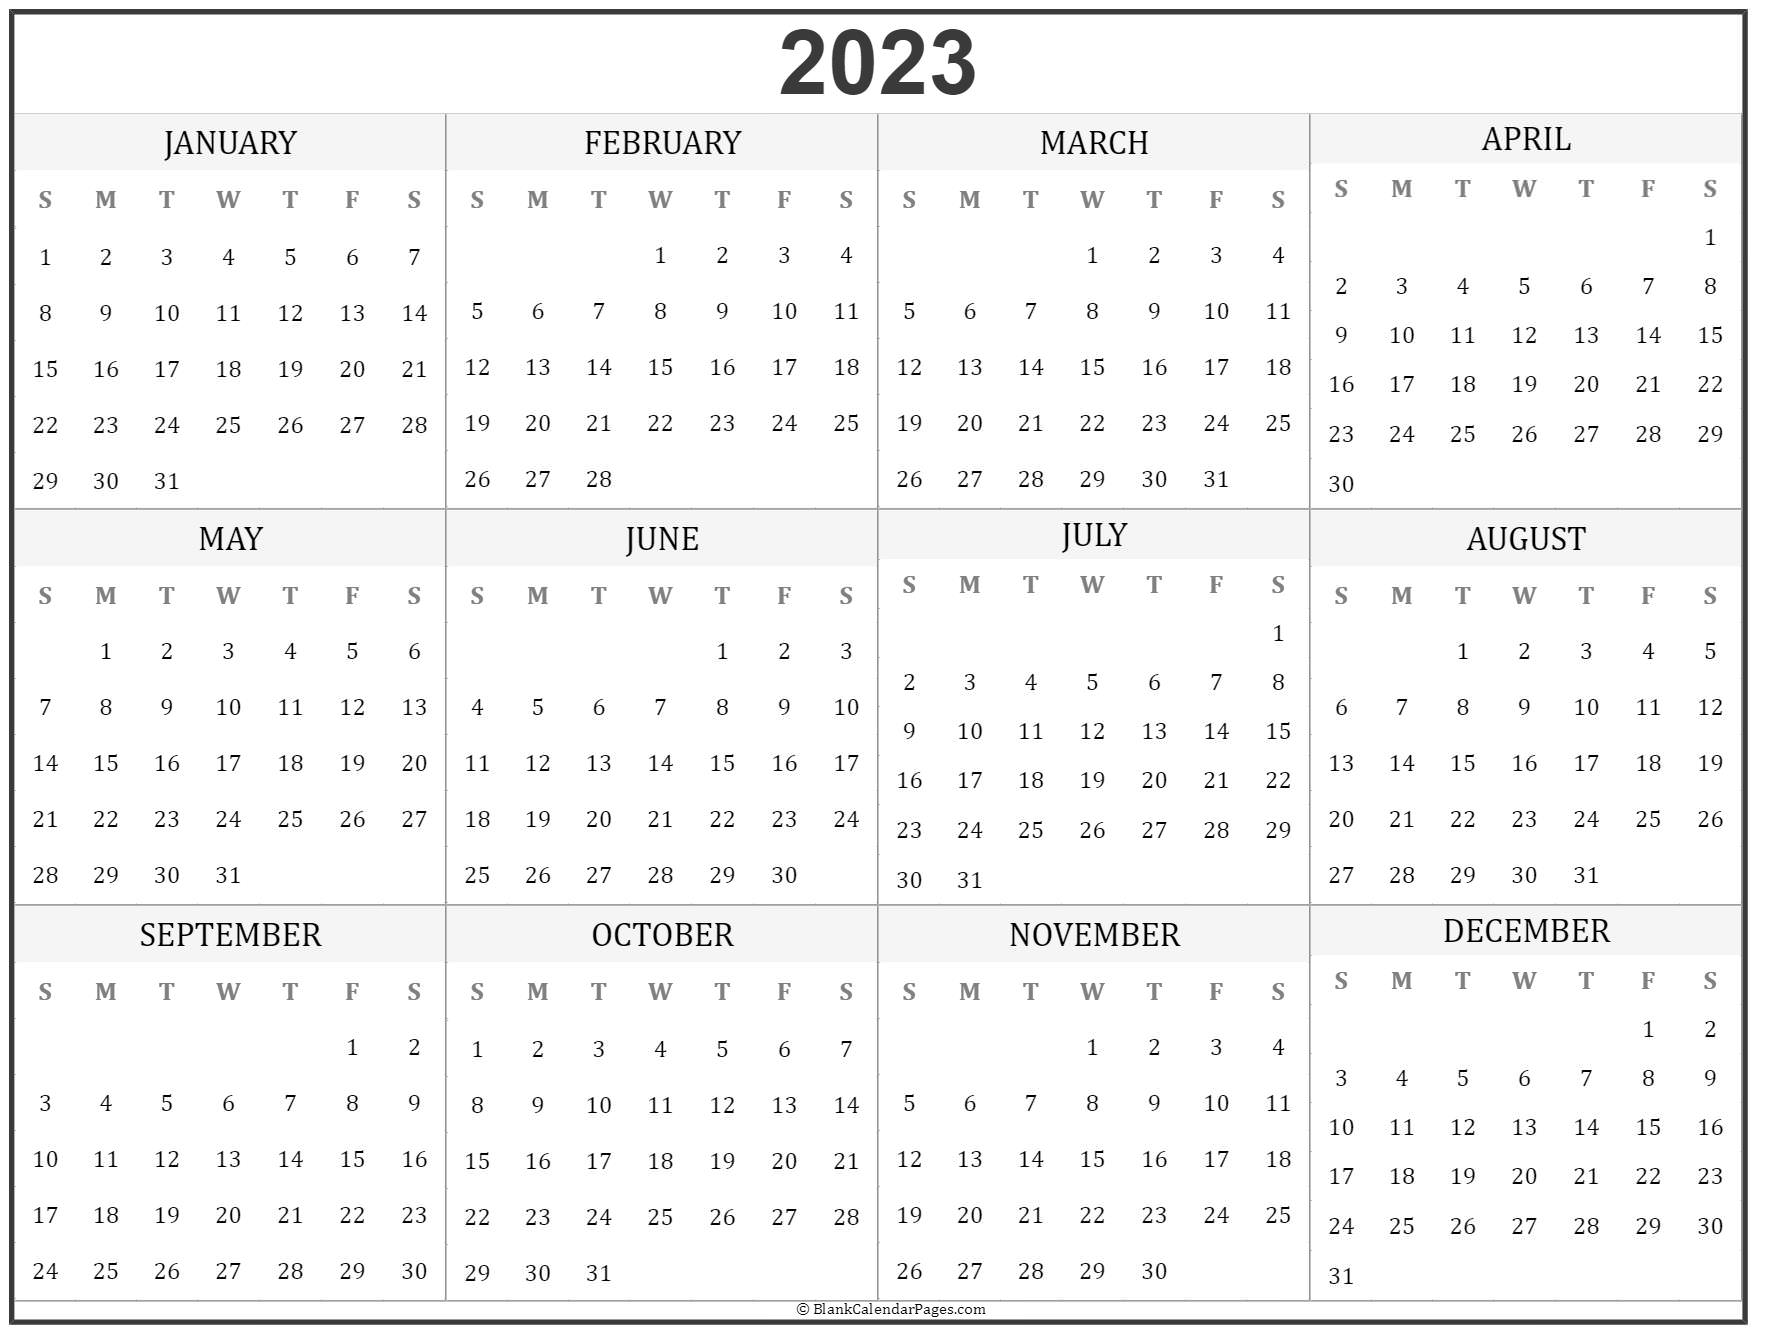 Calendar Year 2023 Calendar Time and Date Calendar 2023 Canada